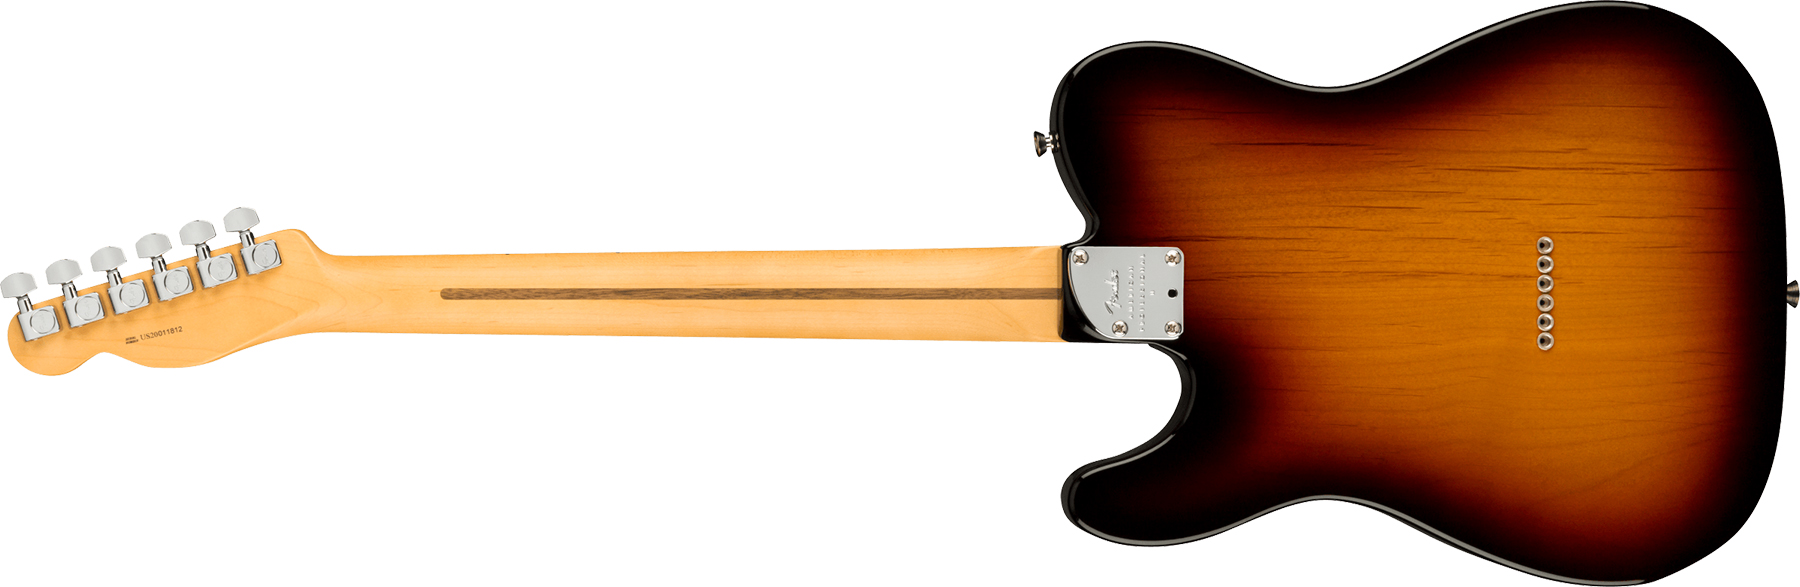 Fender Tele American Professional Ii Usa Rw - 3-color Sunburst - Guitarra eléctrica con forma de tel - Variation 1